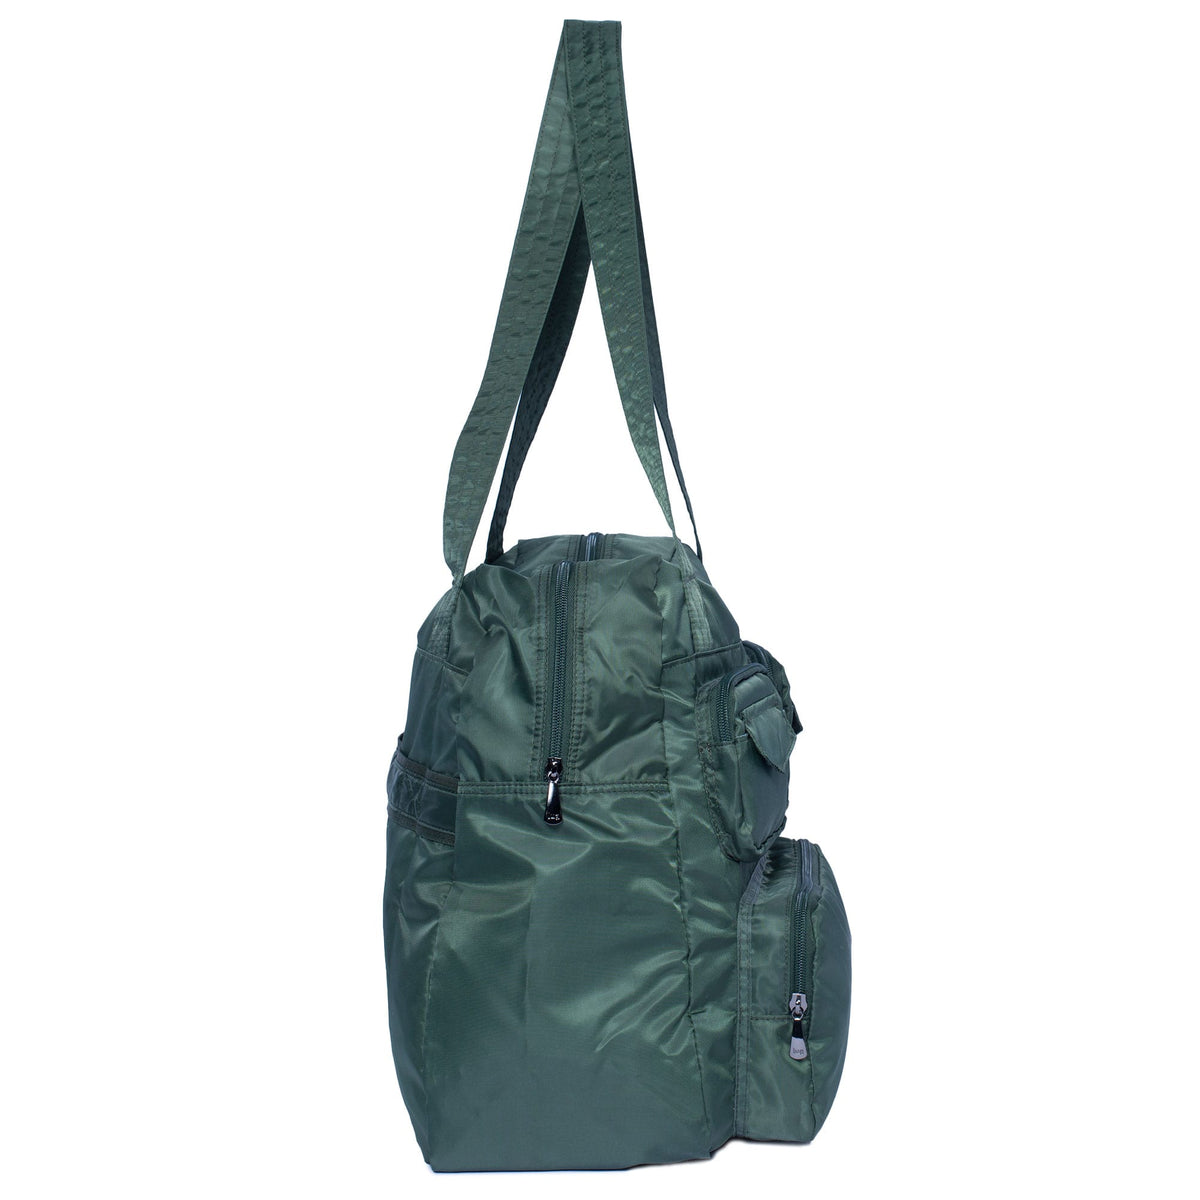 Puddle Jumper Packable Tote Bag